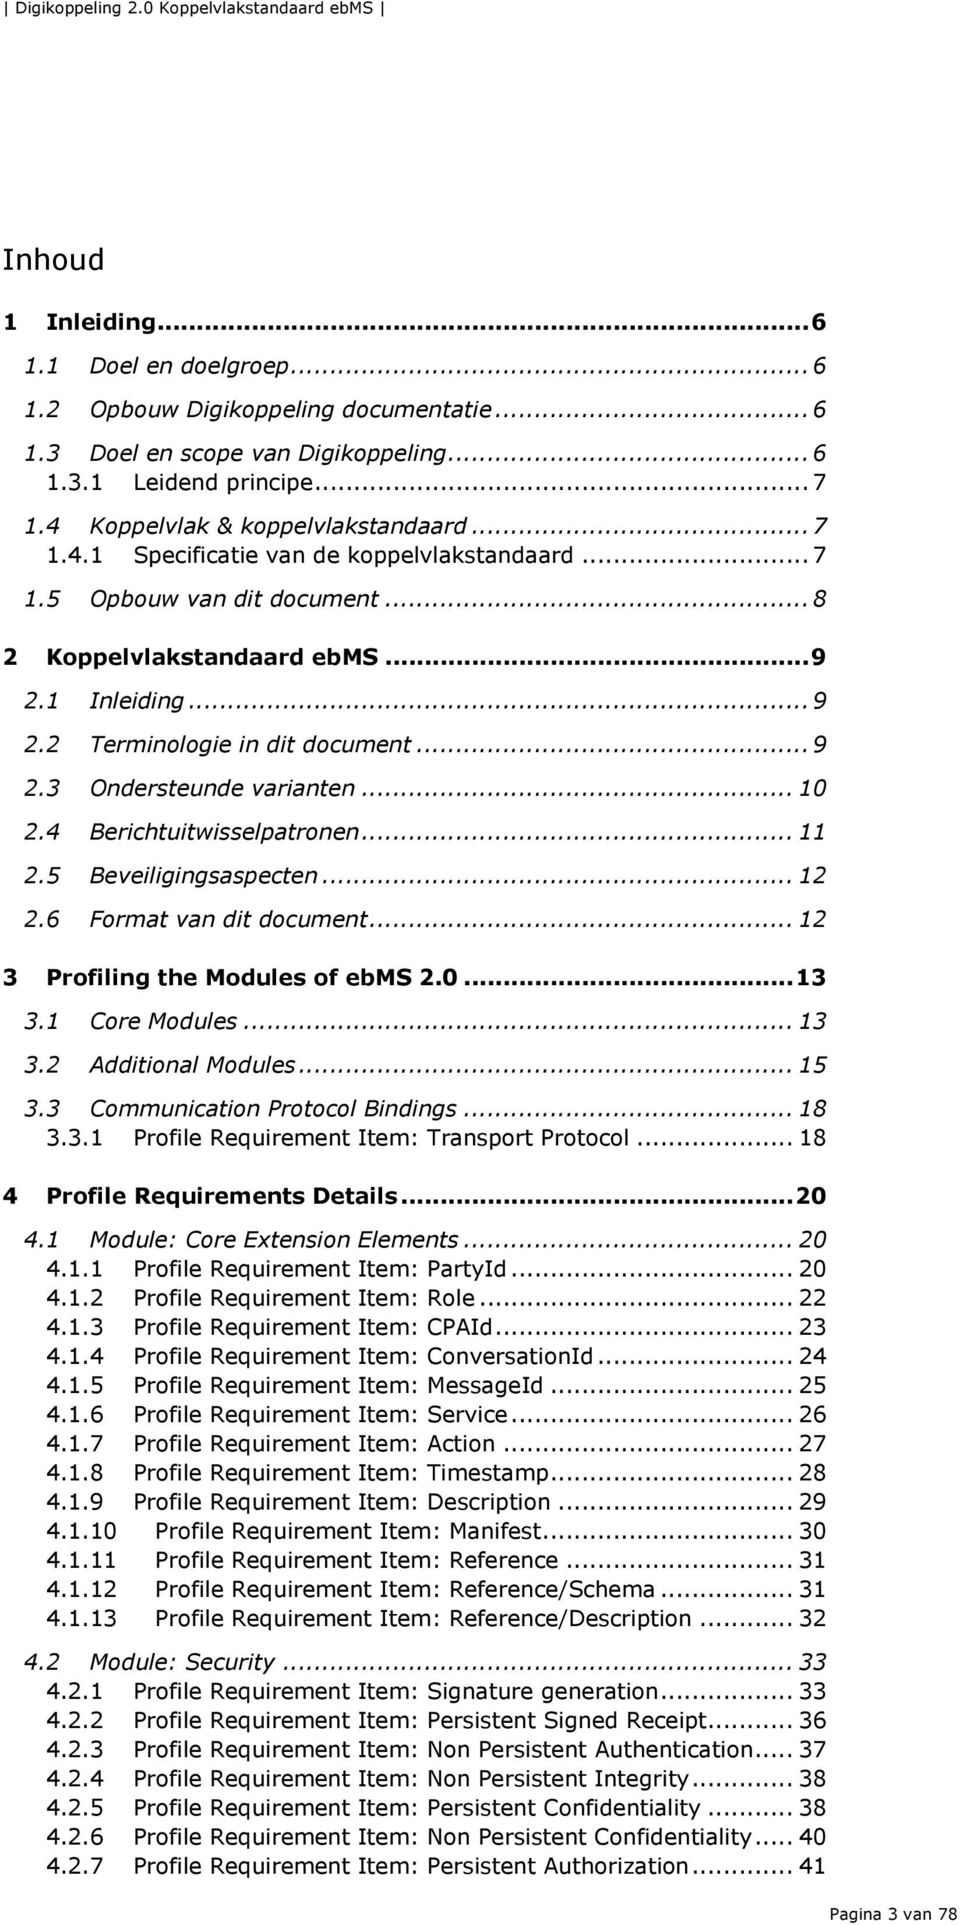 .. 10 2.4 Berichtuitwisselpatronen... 11 2.5 Beveiligingsaspecten... 12 2.6 Format van dit document... 12 3 Profiling the Modules of ebms 2.0... 13 3.1 Core Modules... 13 3.2 Additional Modules... 15 3.